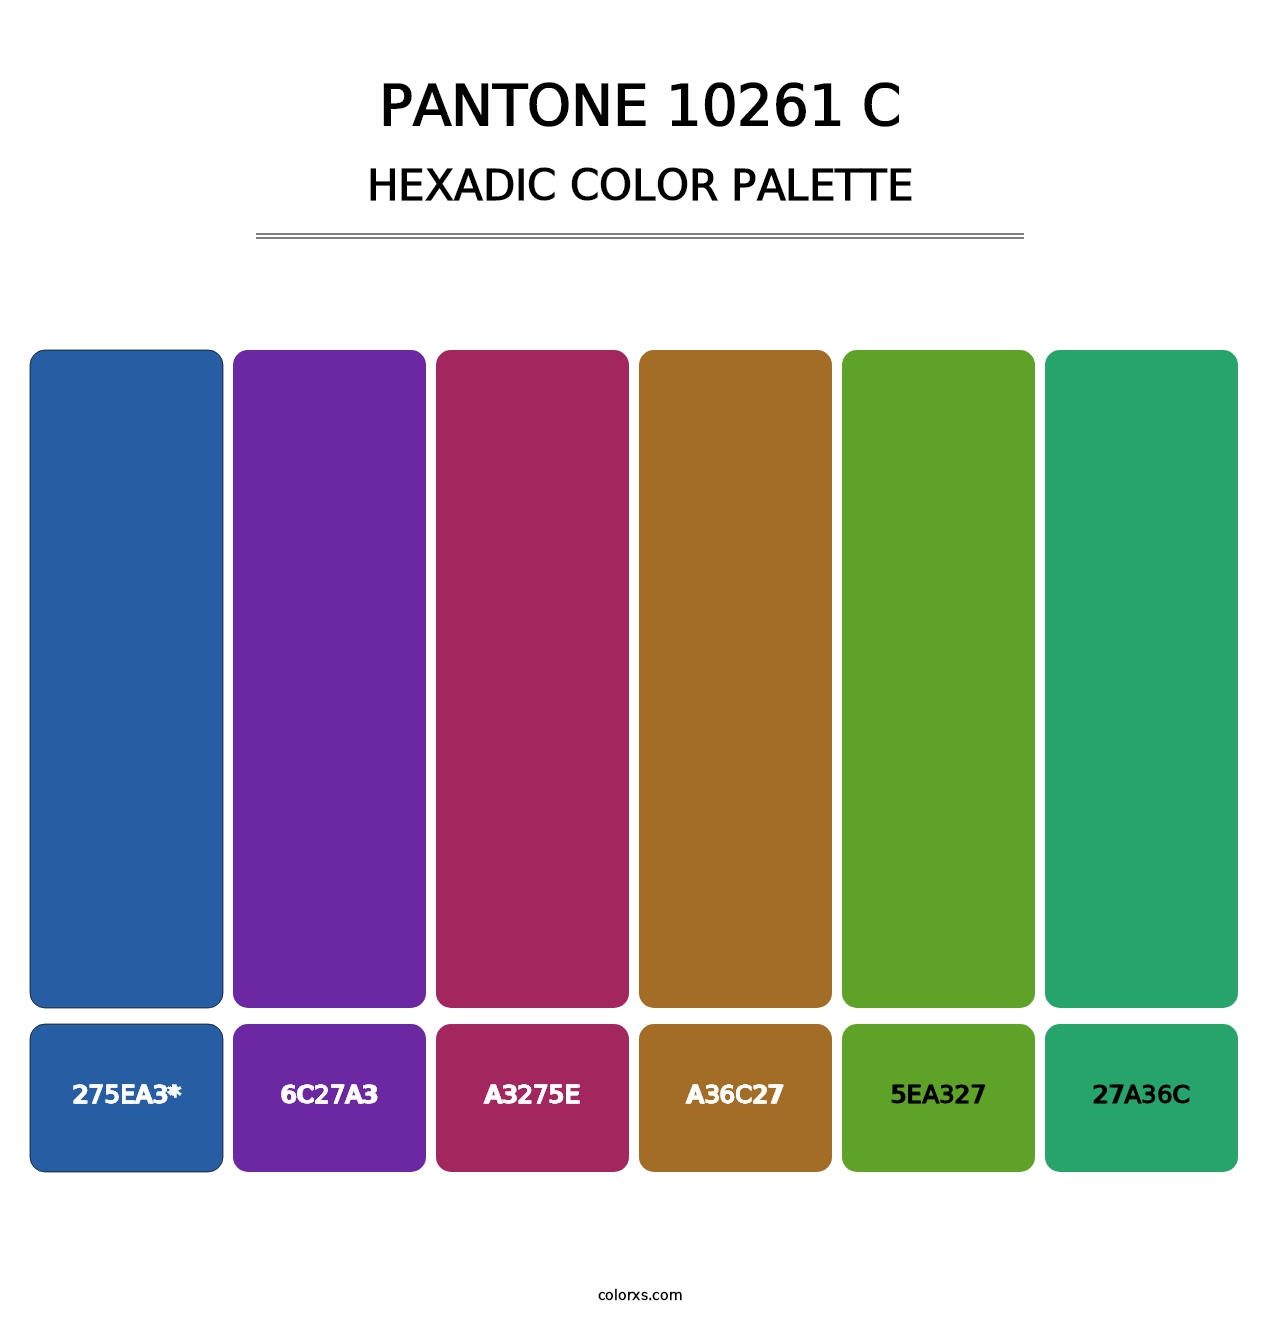 PANTONE 10261 C - Hexadic Color Palette